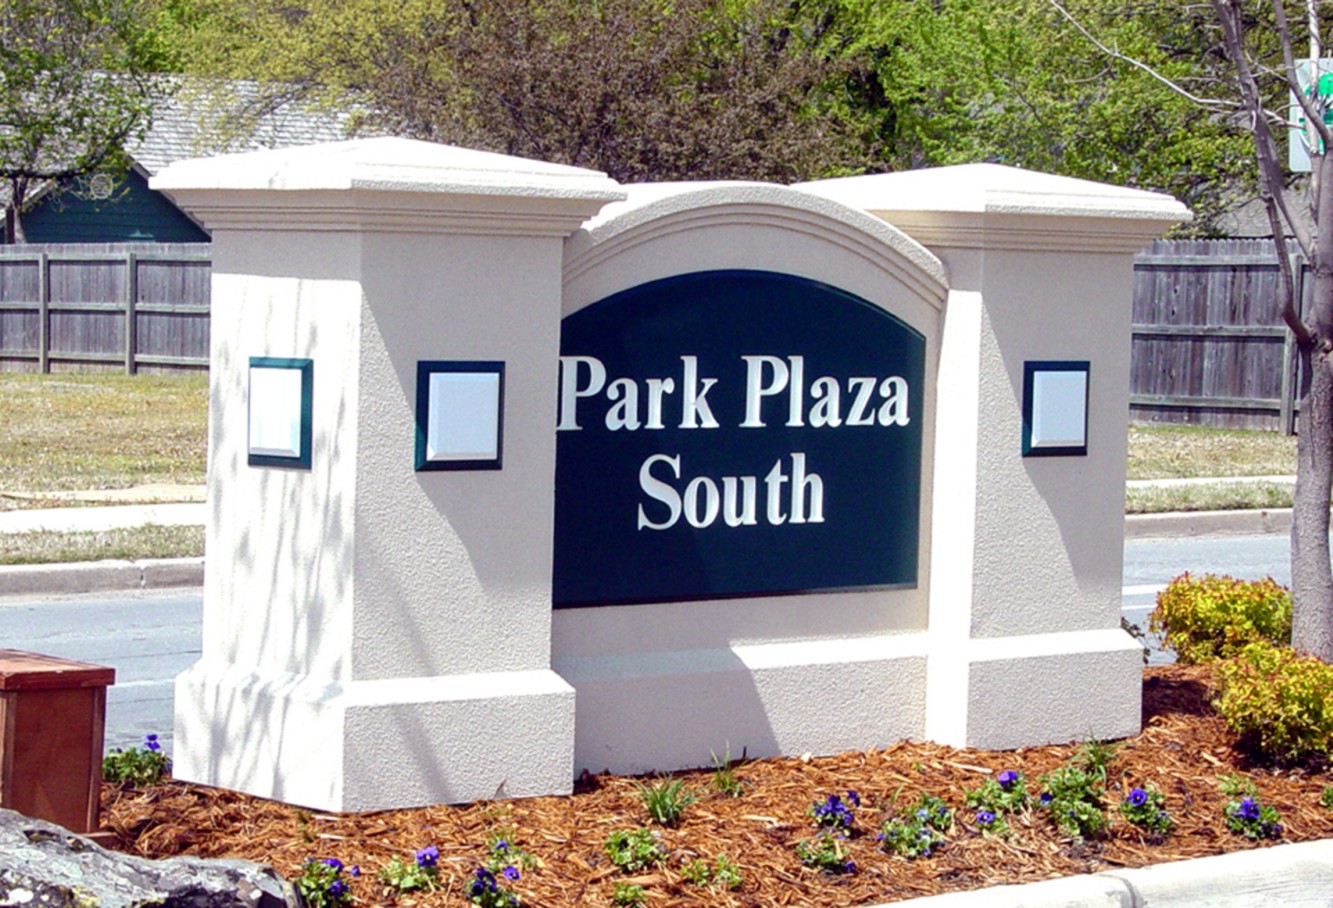 Park Plaza South.jpg